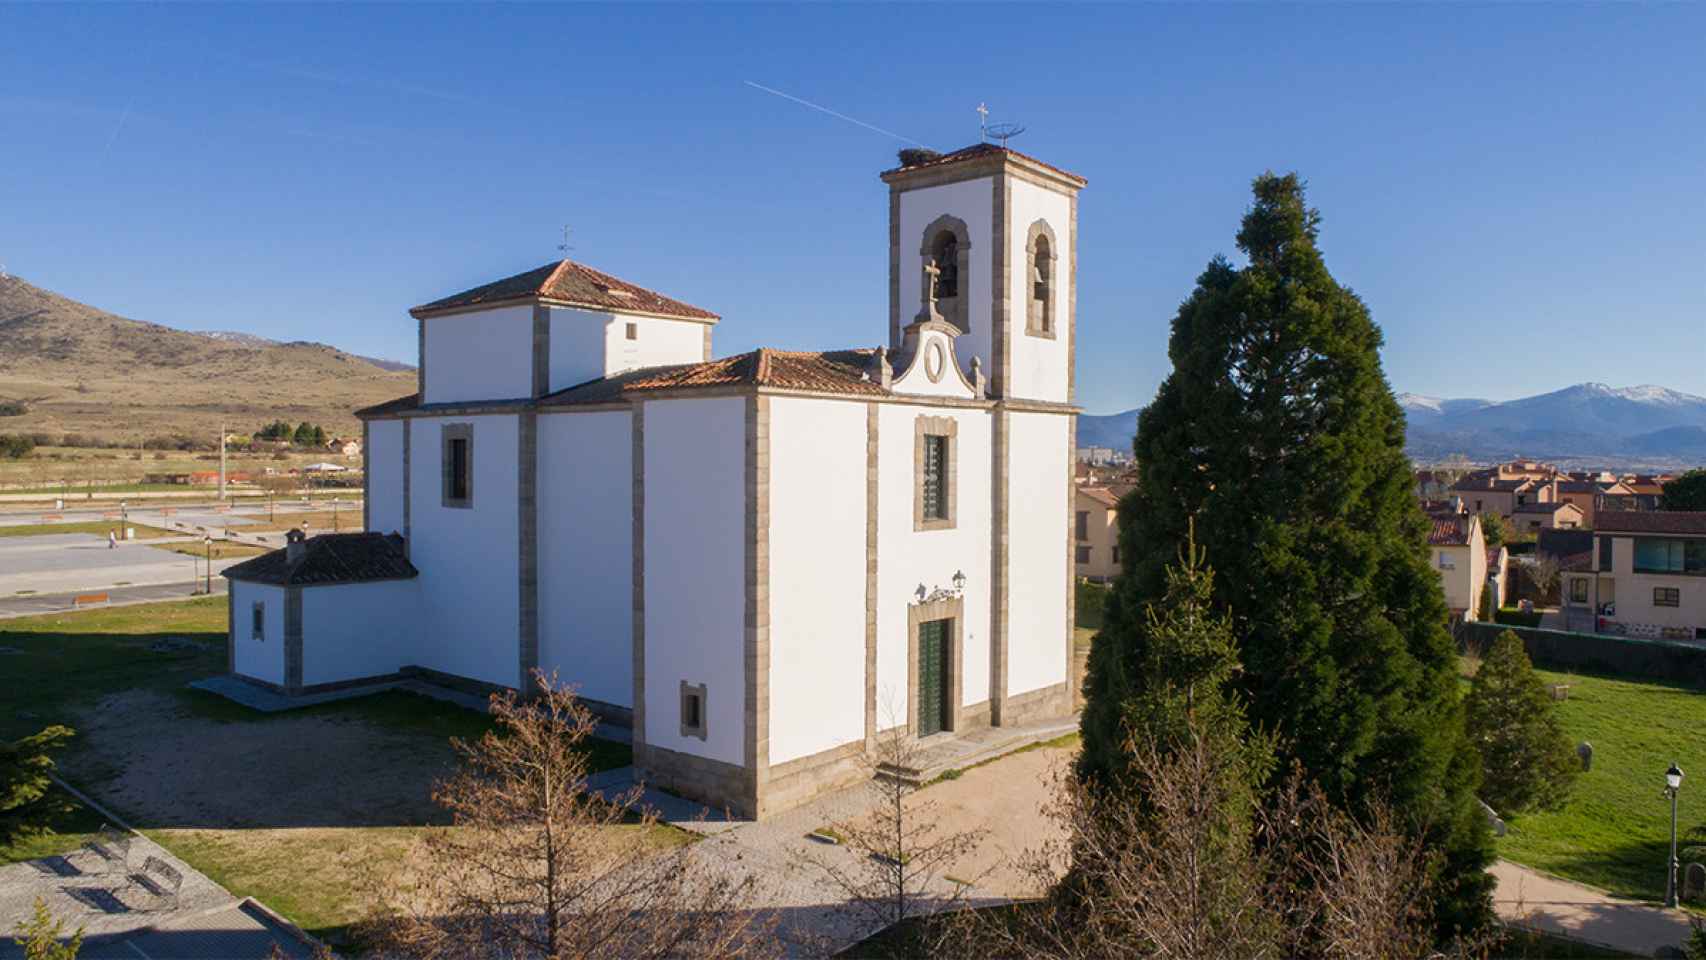 La iglesia parroquial de Trescasas.